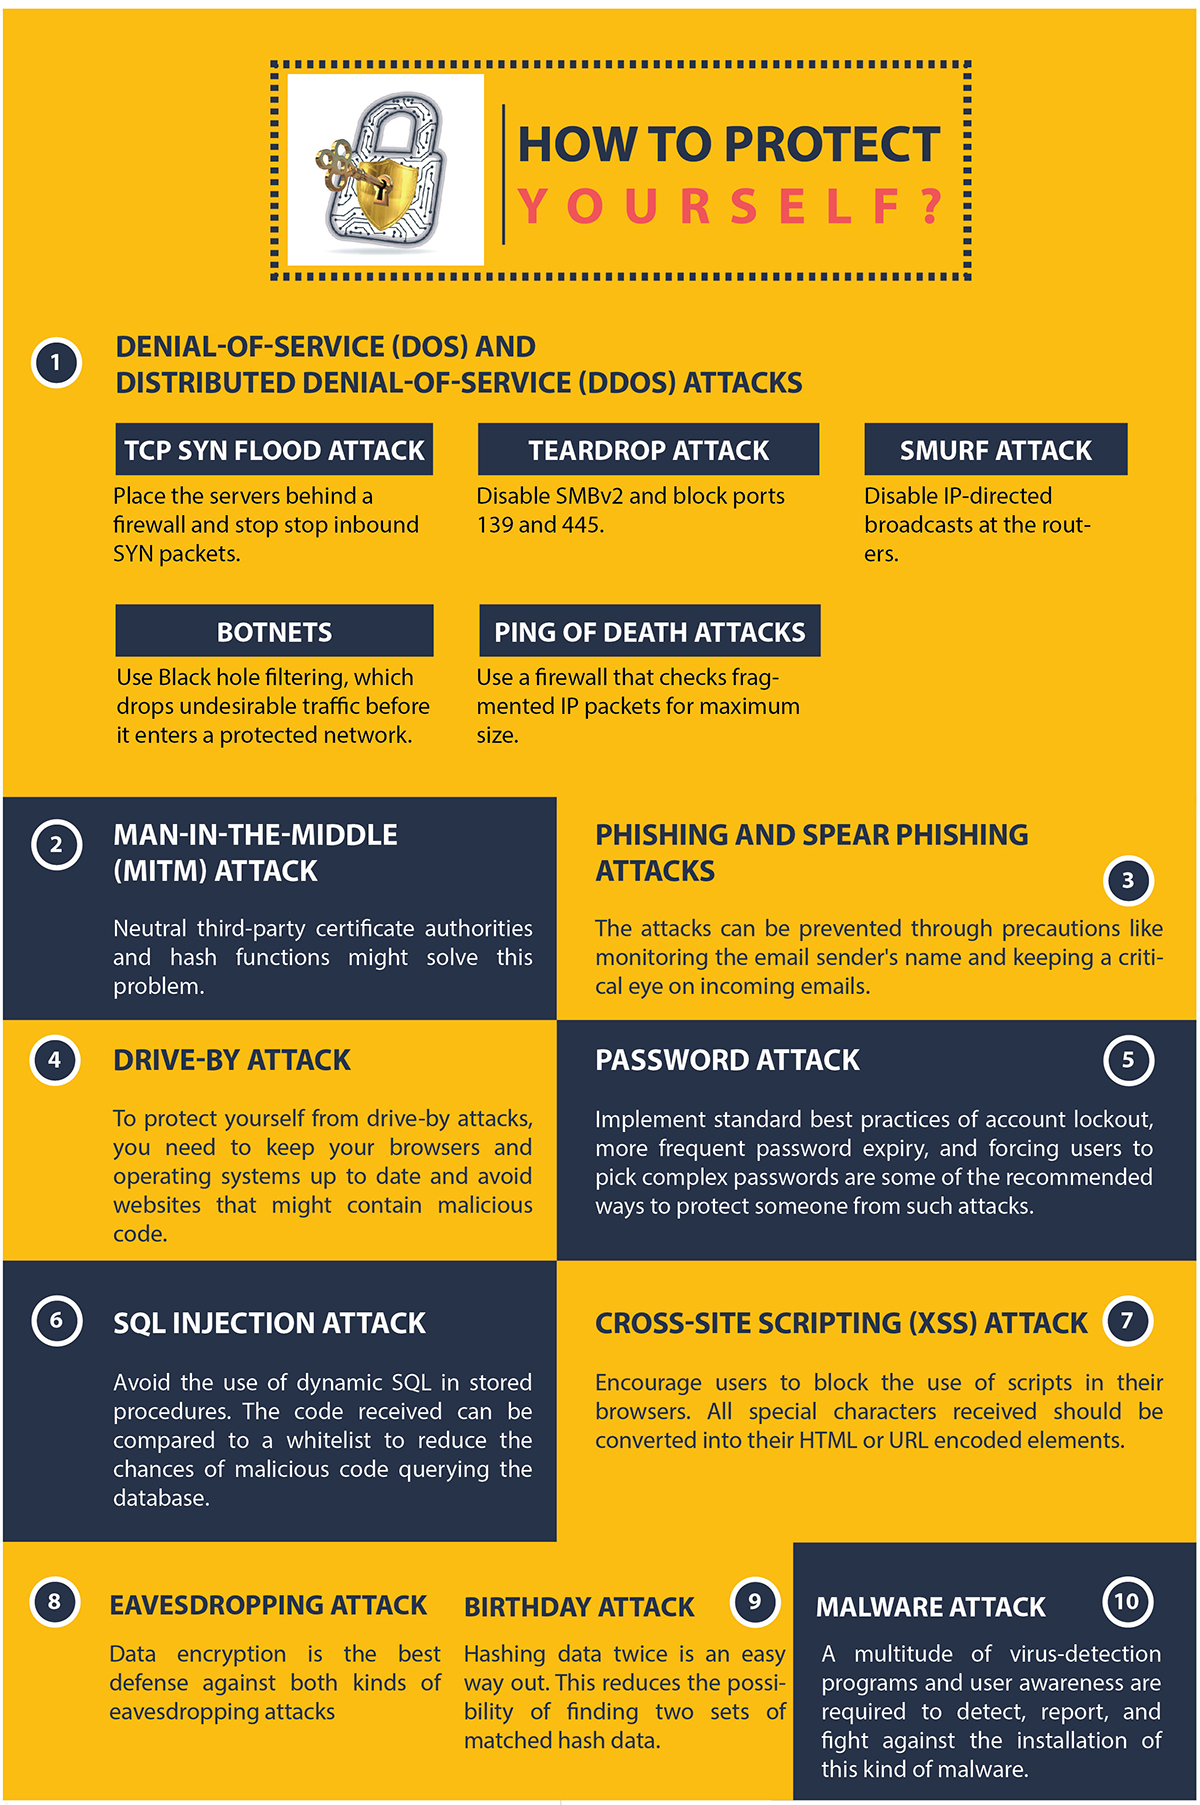 types-of-cyberattacks4.jpg